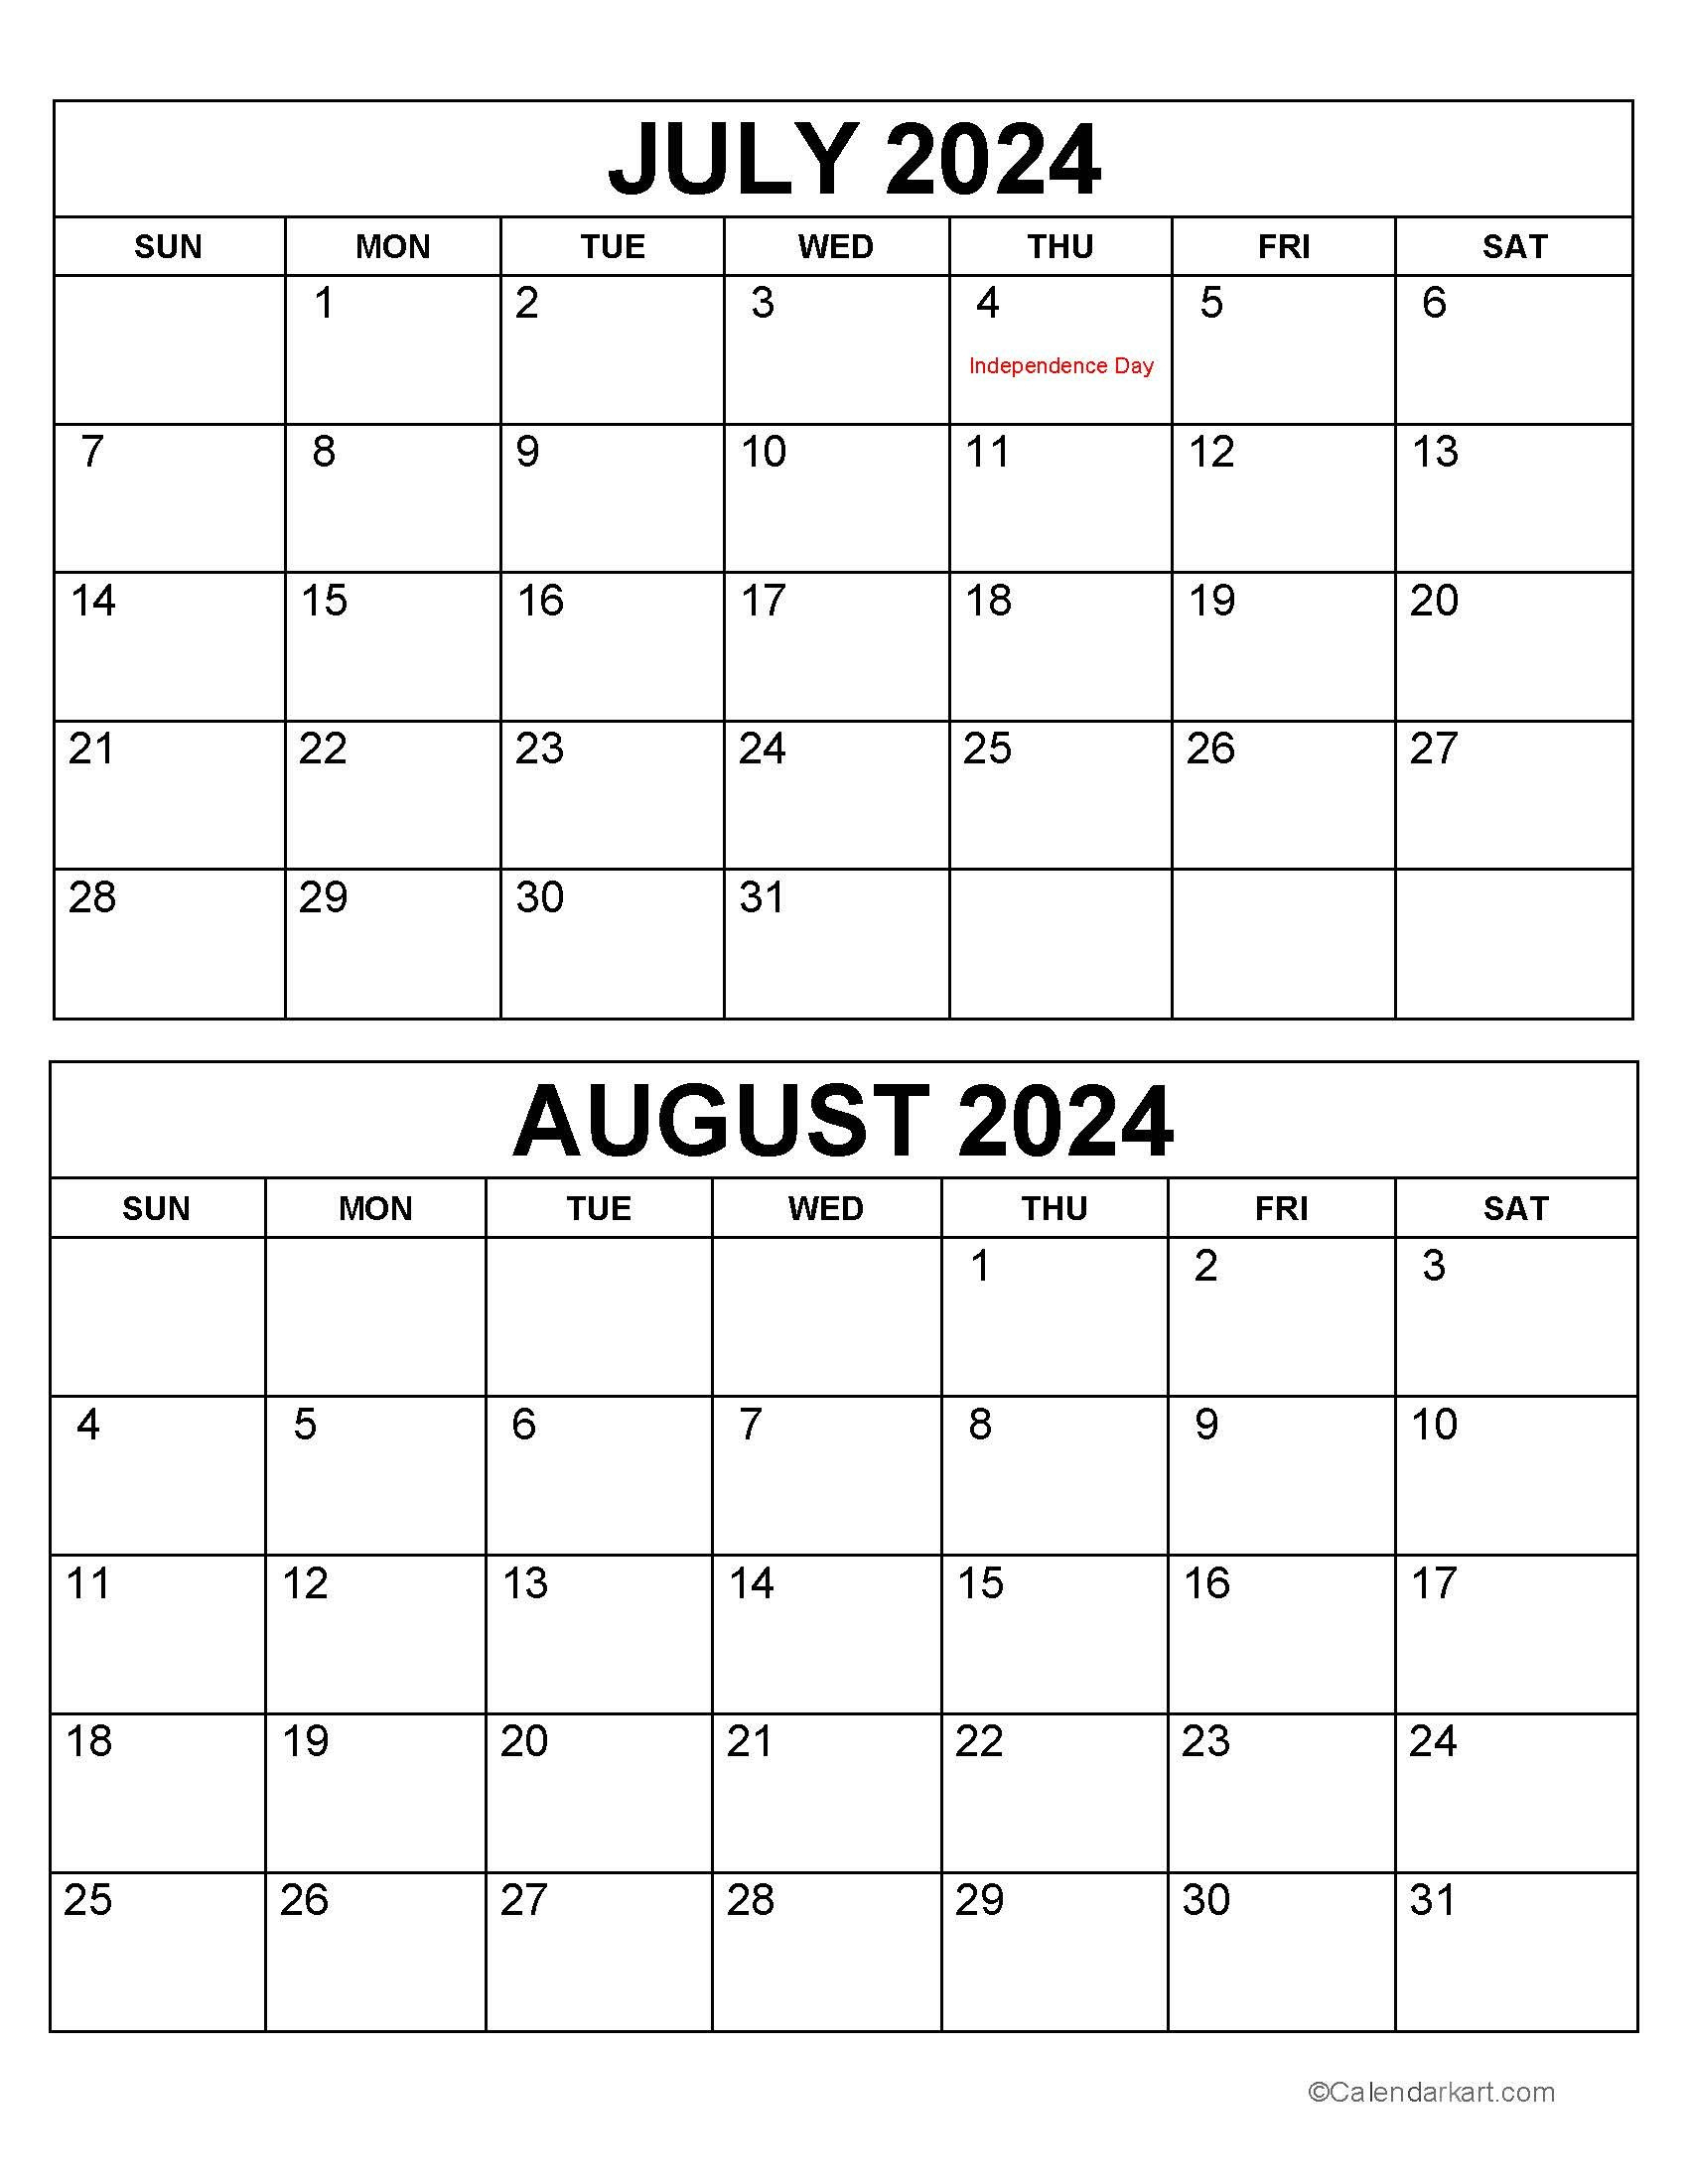 Printable July August 2024 Calendar | Calendarkart intended for July August Printable Calendar 2024